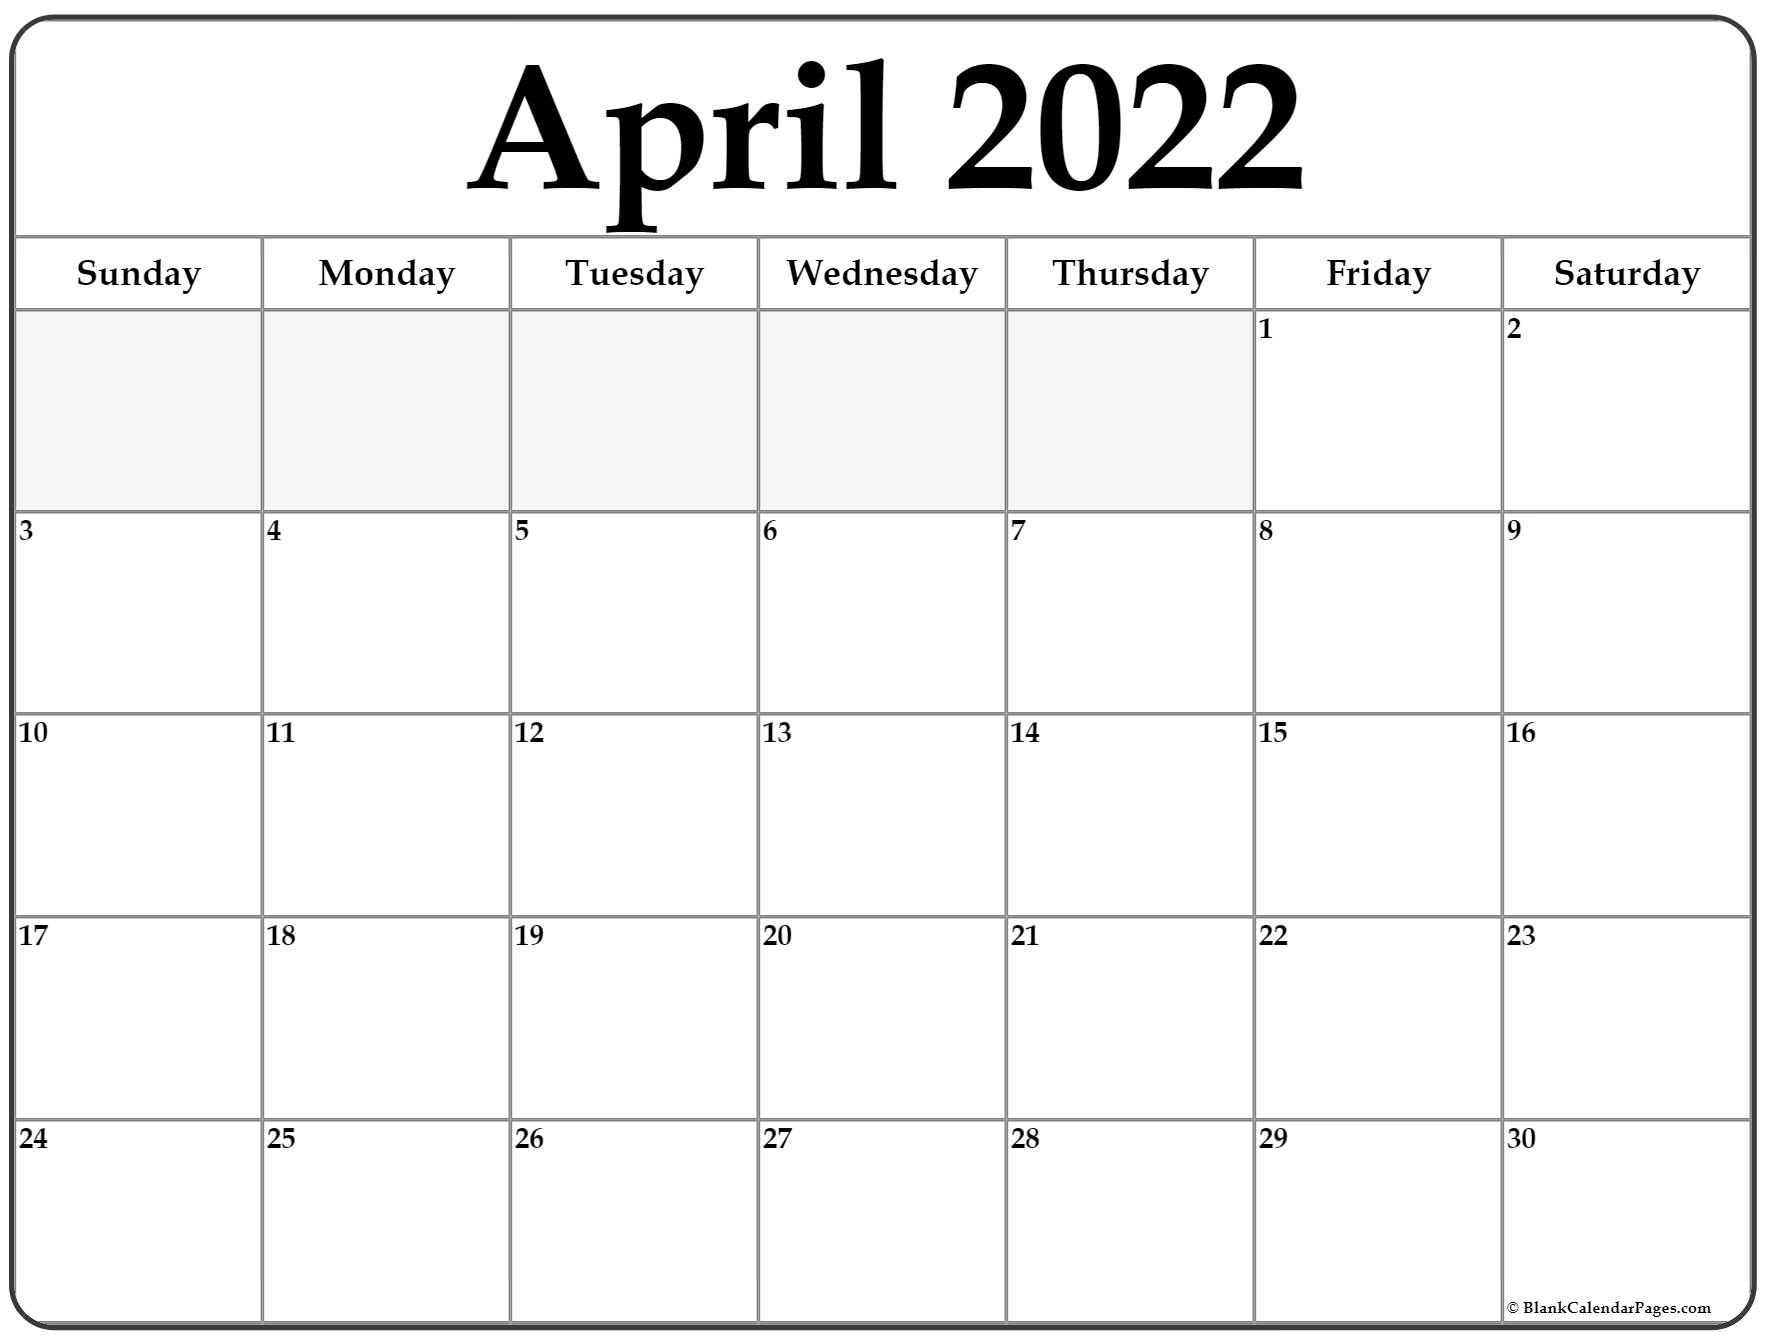 April 2022 Calendar Kohinoor - Latest News Update